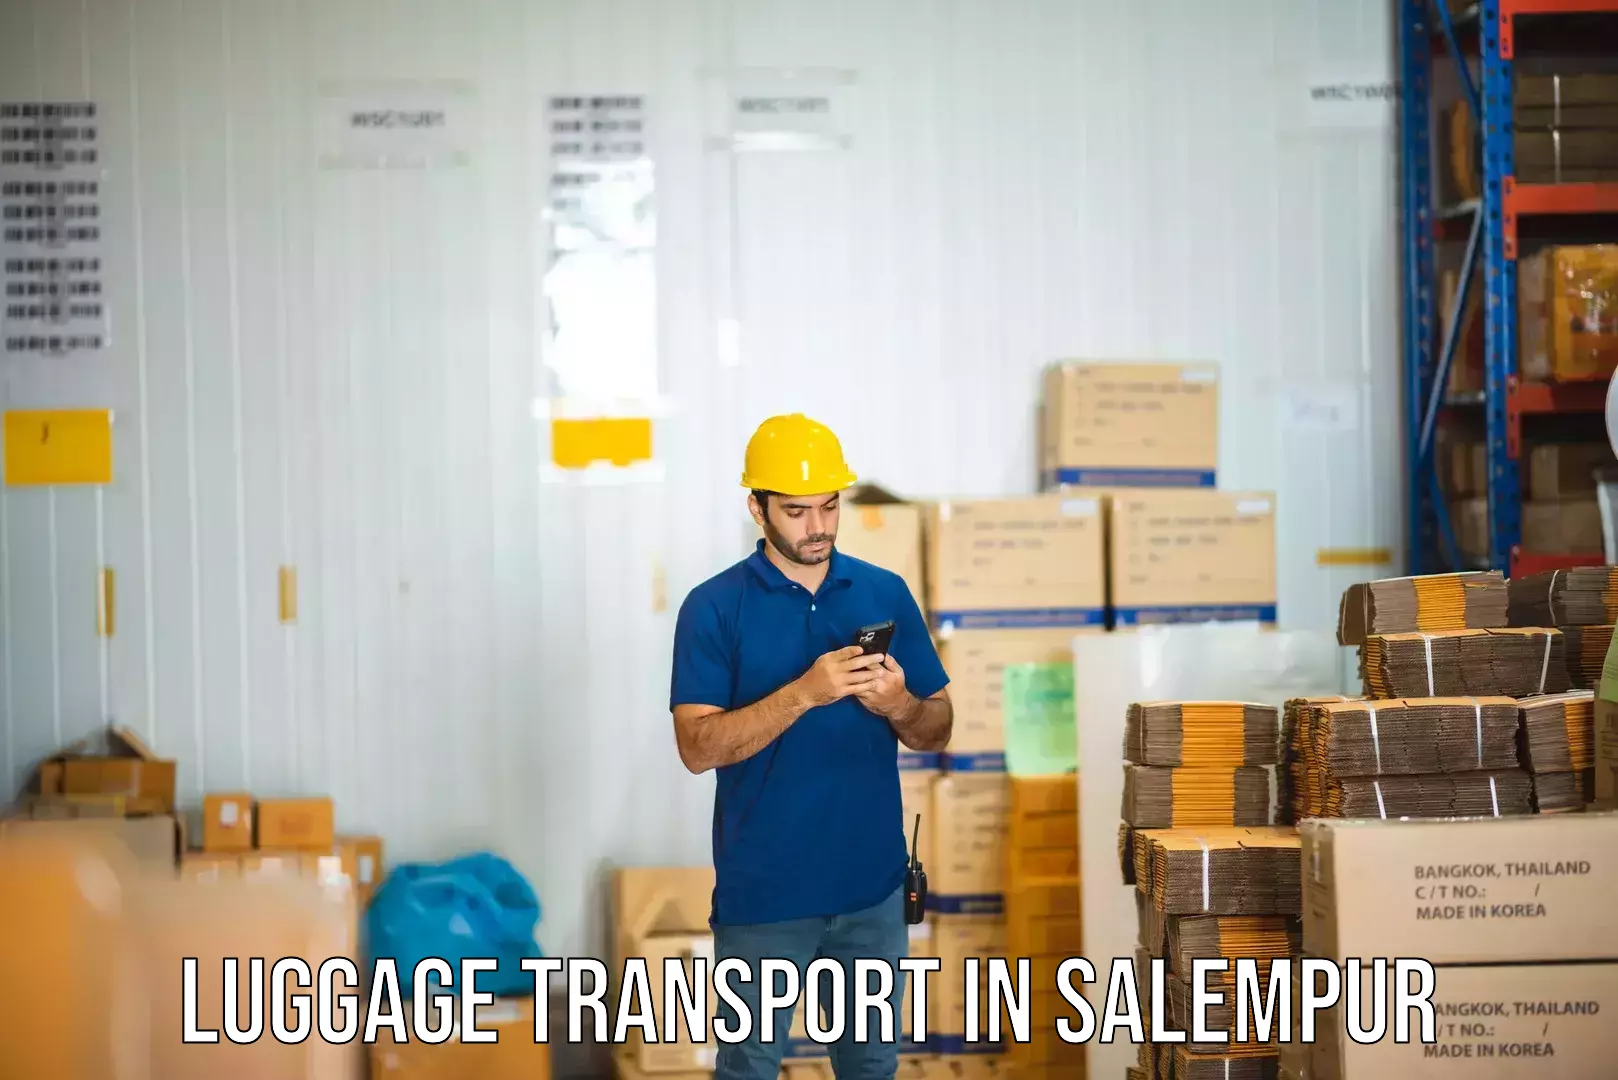 Luggage forwarding service in Salempur